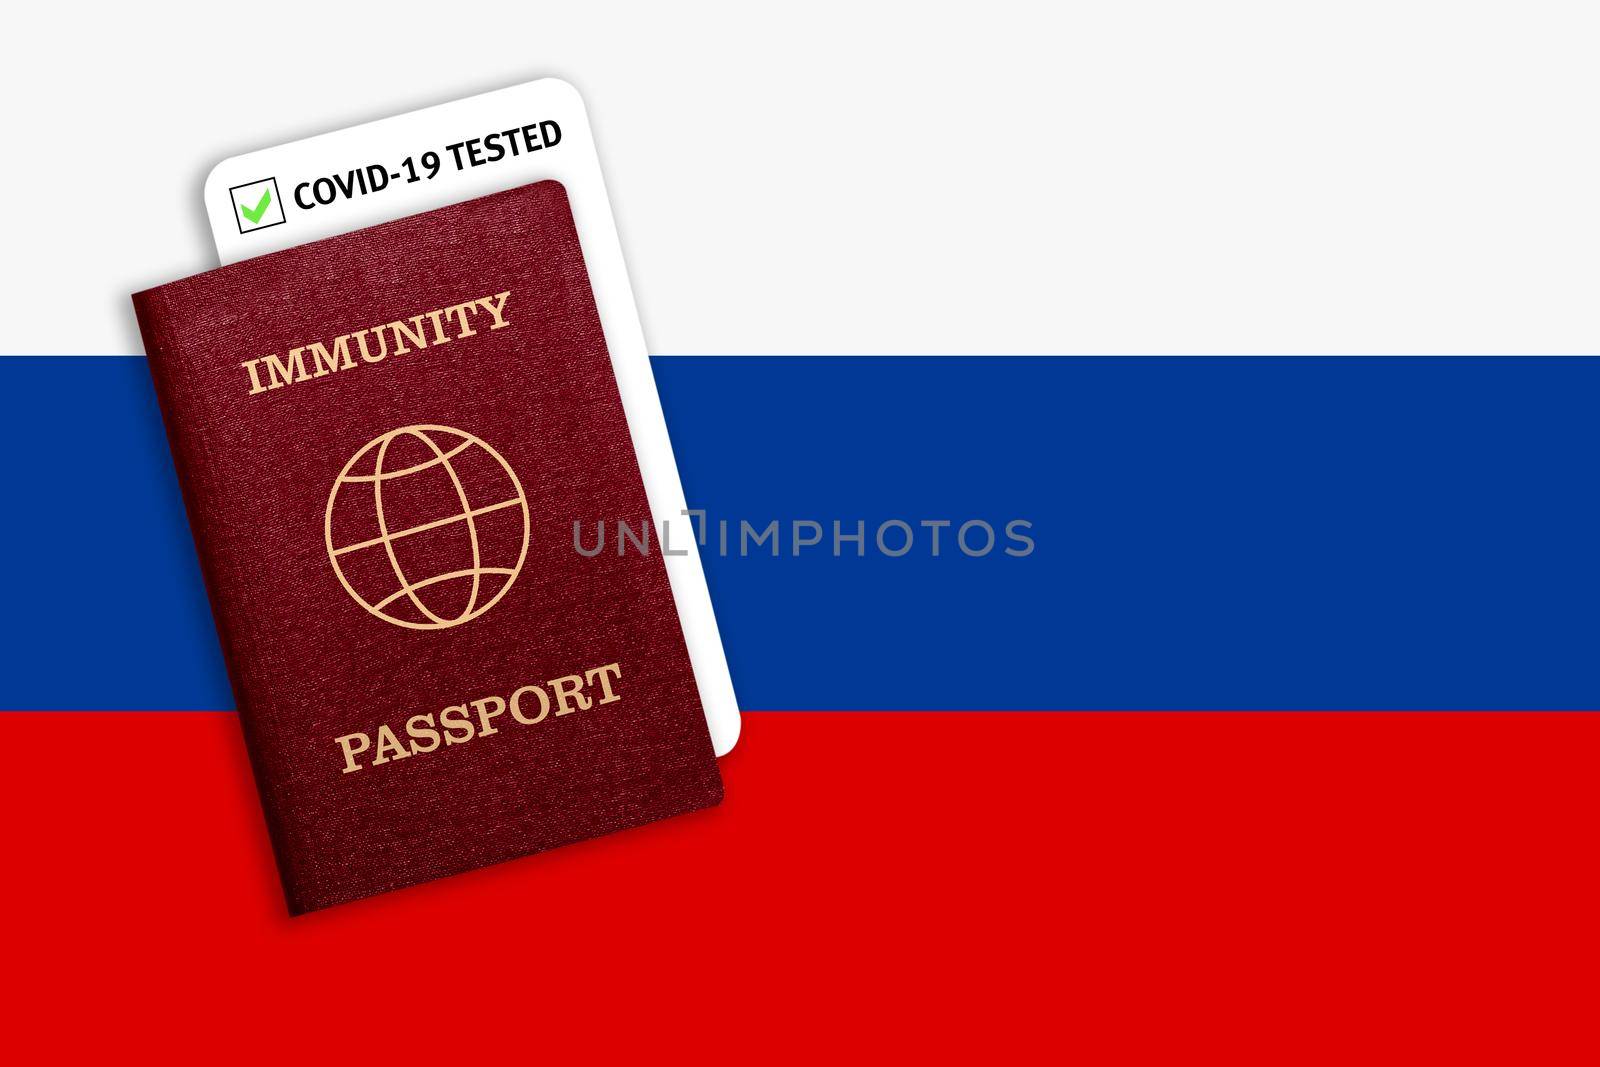 Immunity passport and test result for COVID-19 on flag of Slovakia. by galinasharapova